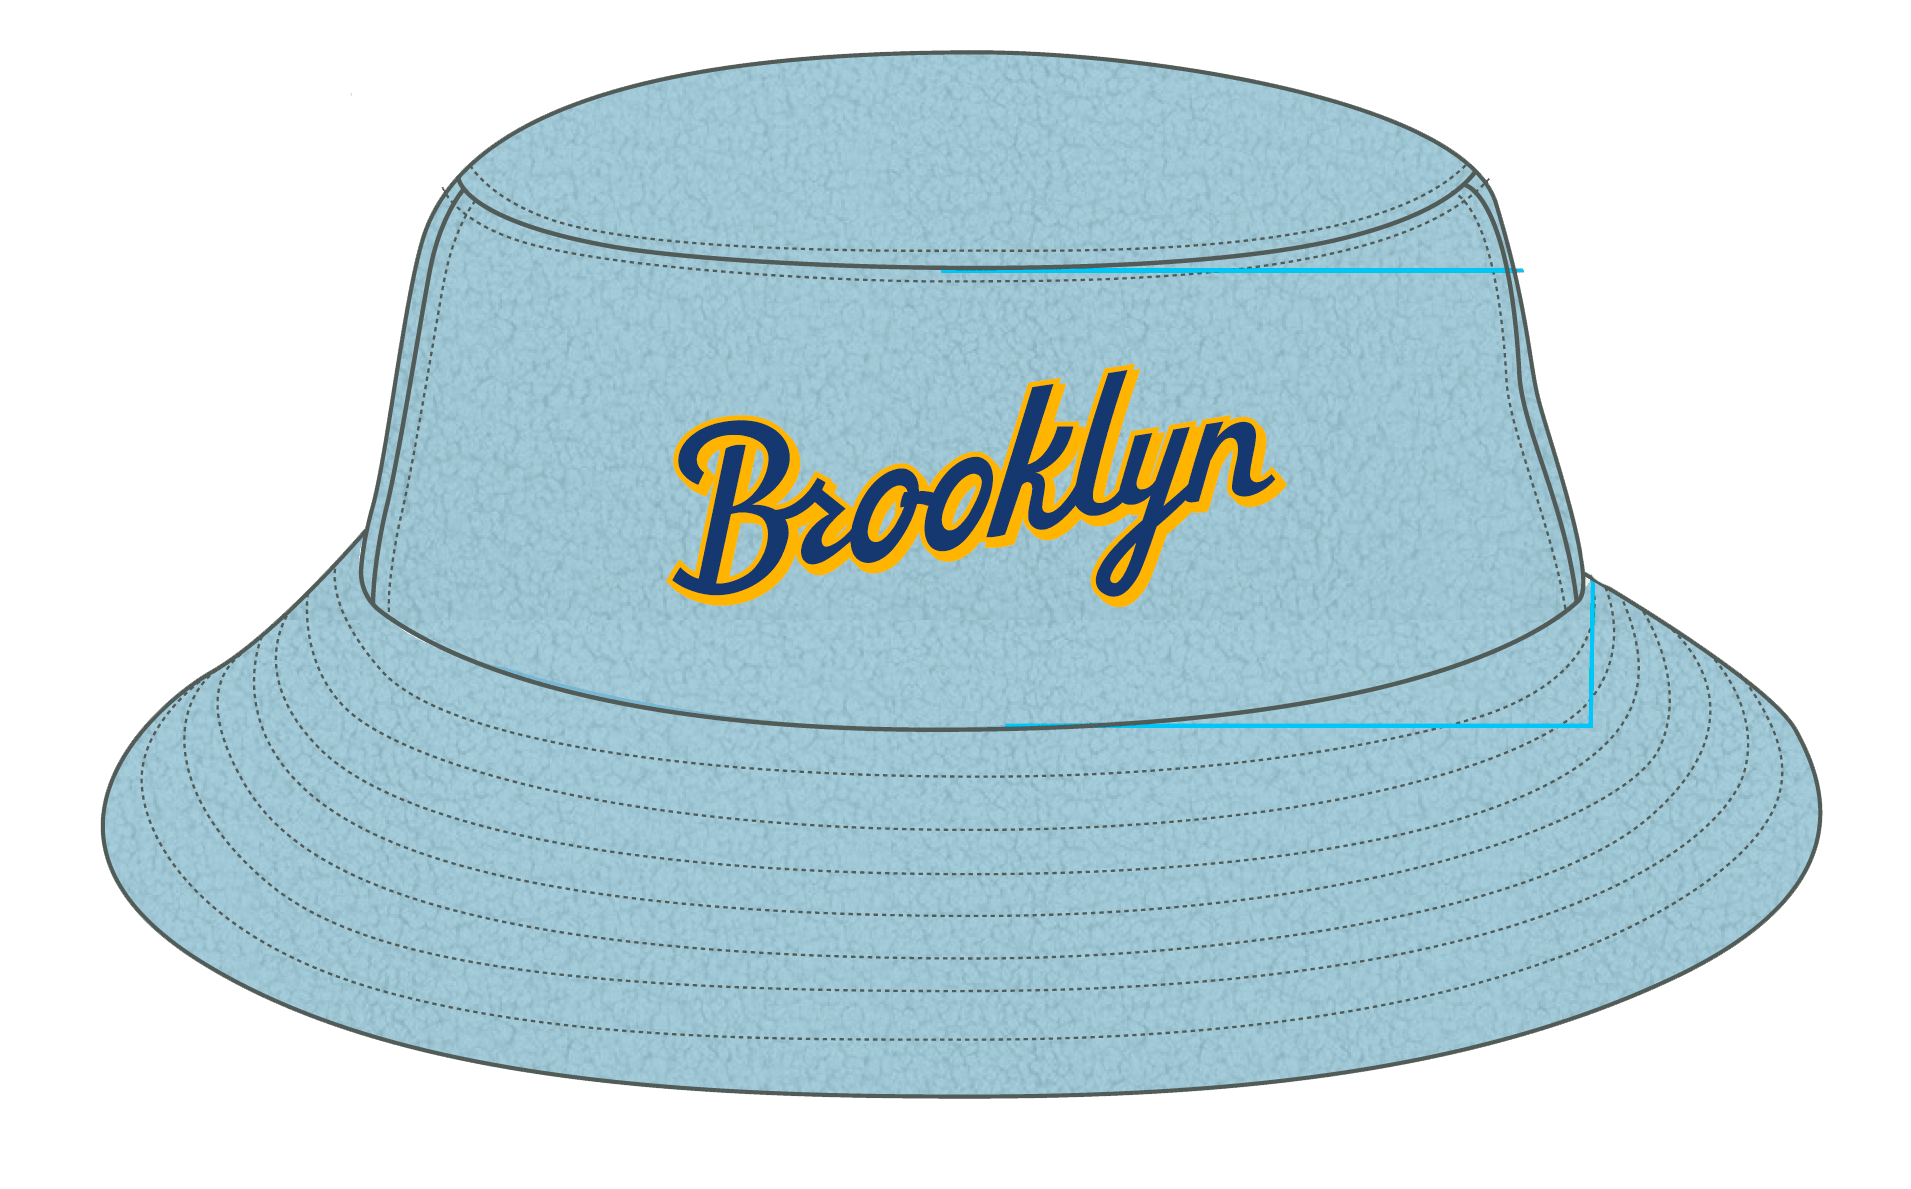 Brooklyn Cyclones Promotions